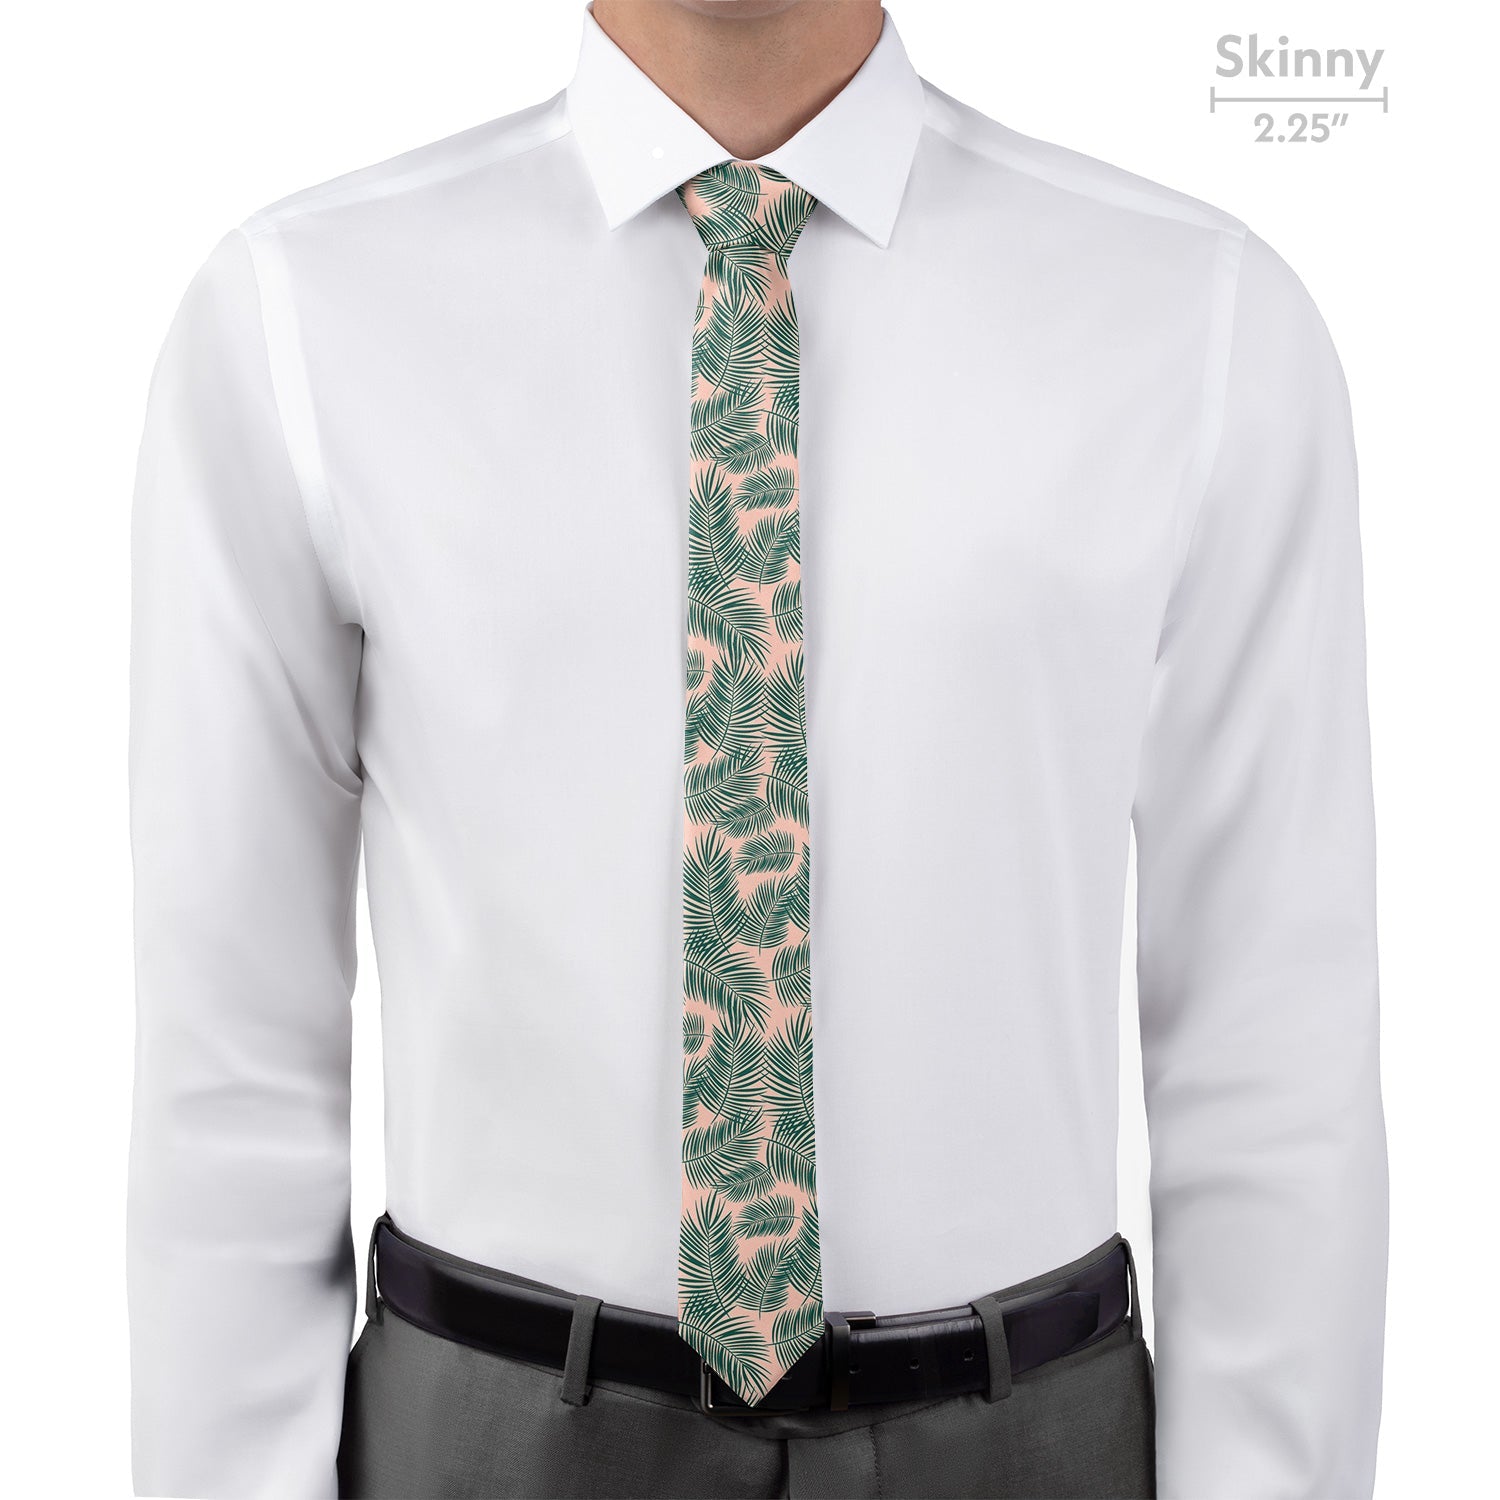 Palm Leaves Necktie - Skinny - Knotty Tie Co.